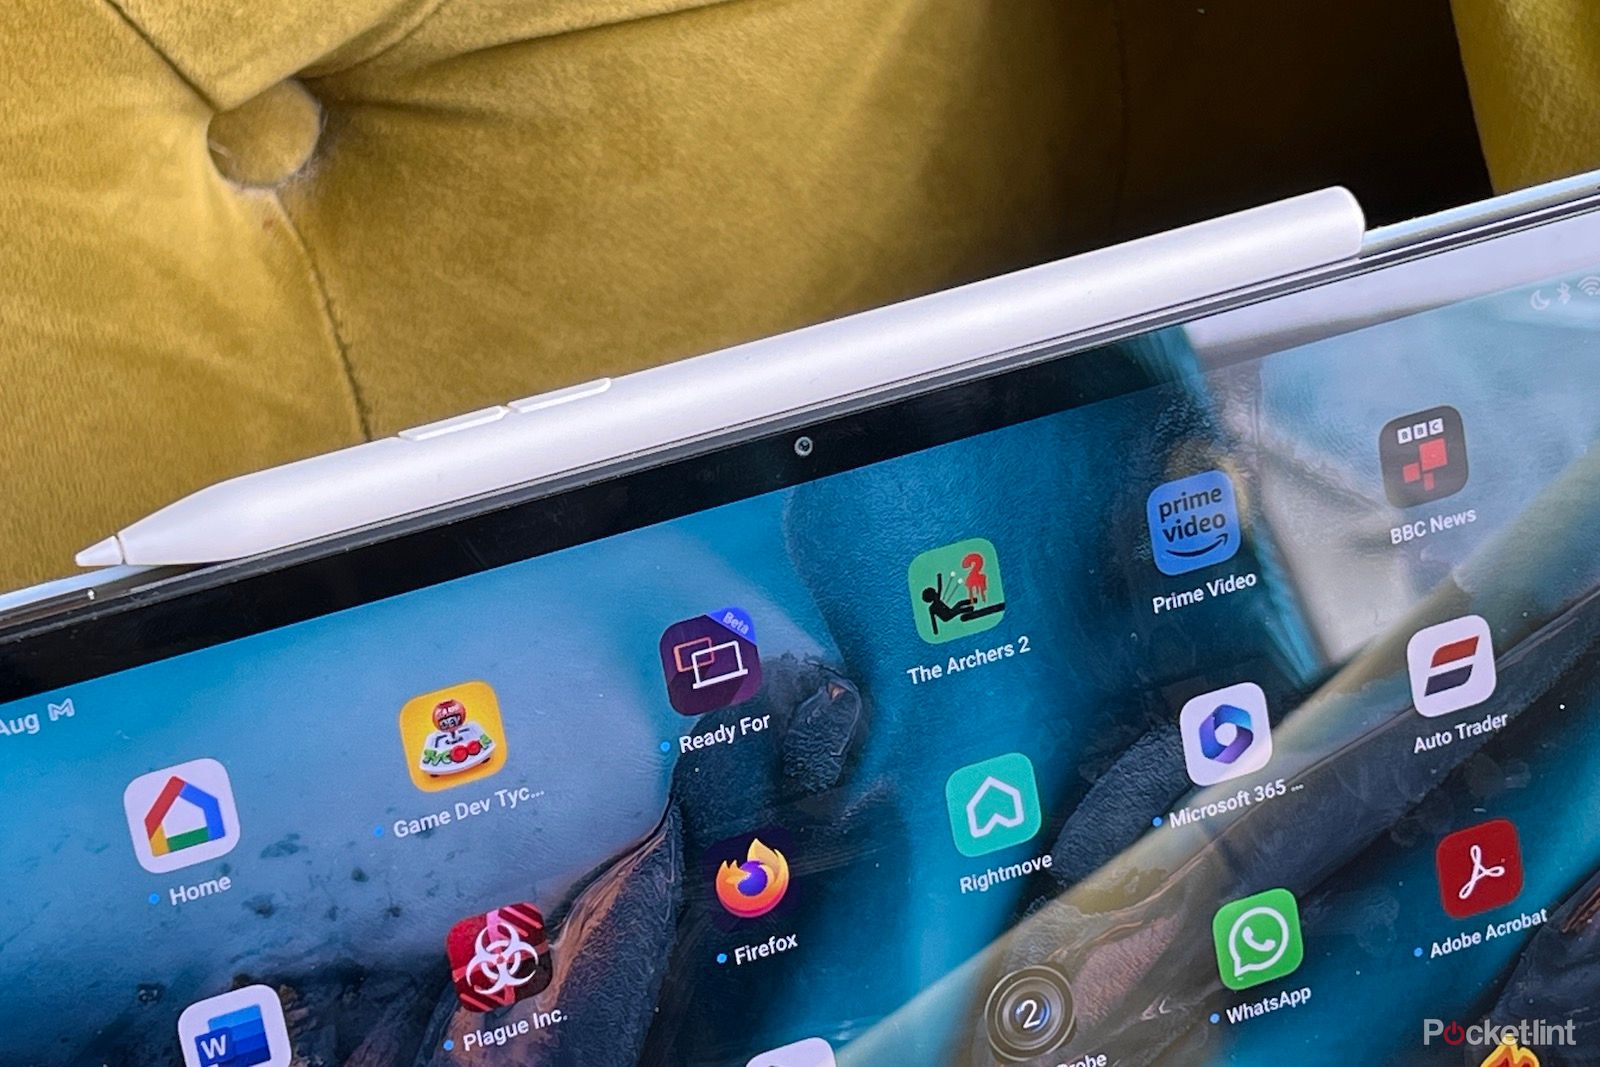 Xiaomi Pad 6 review: Design, build quality, accessories